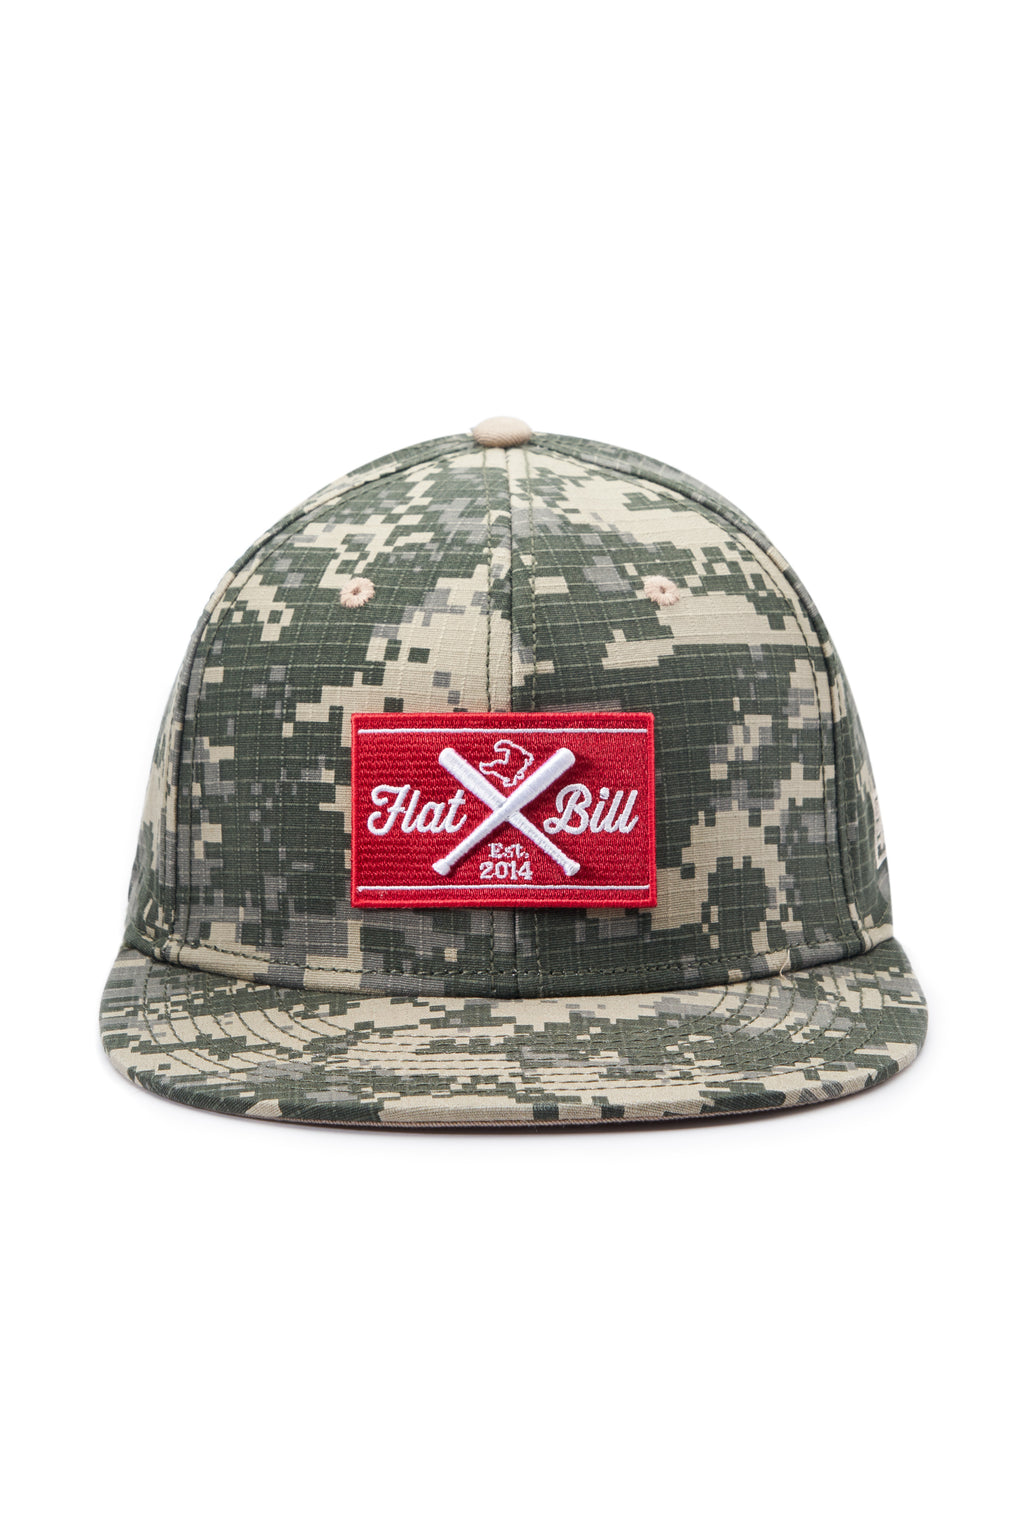 Flatbill Classic Black Flex Fit Cap – Flatbill Baseball